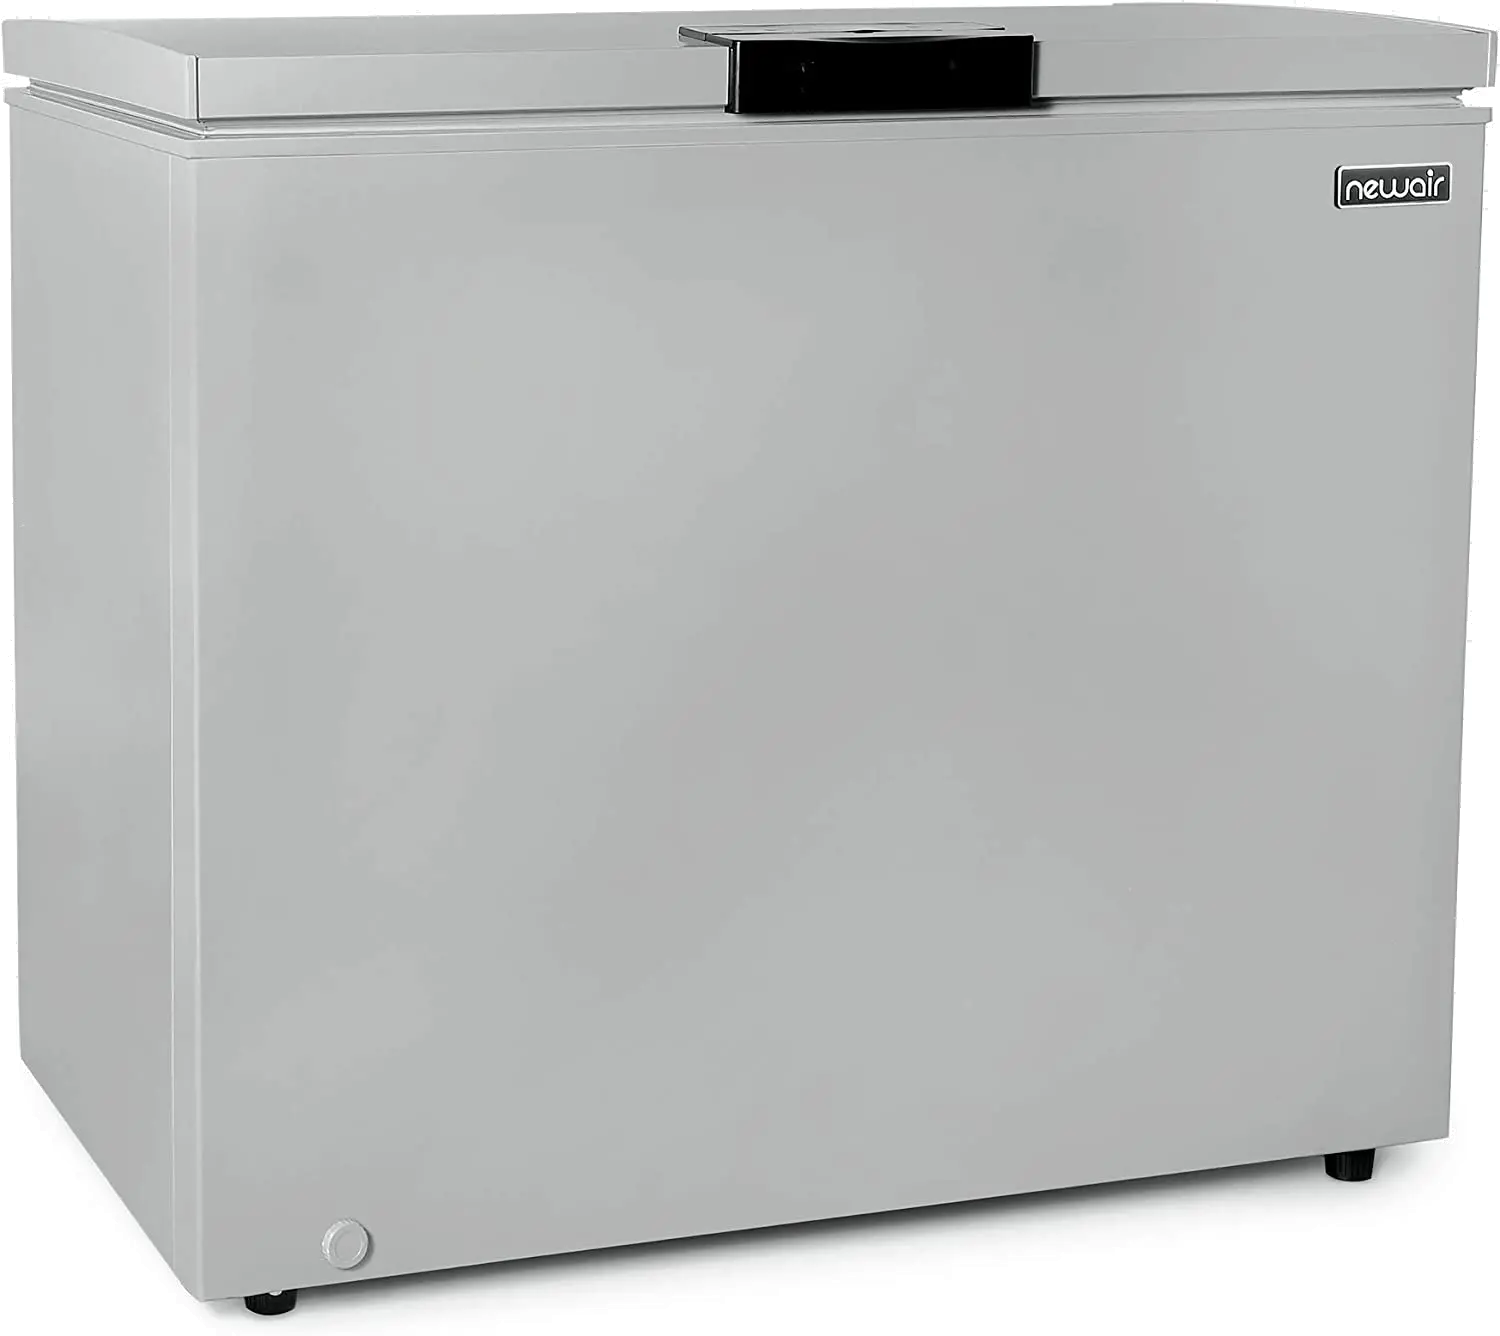 Newair 6.7 Cu. Ft. Compact Chest Freezer - Gray